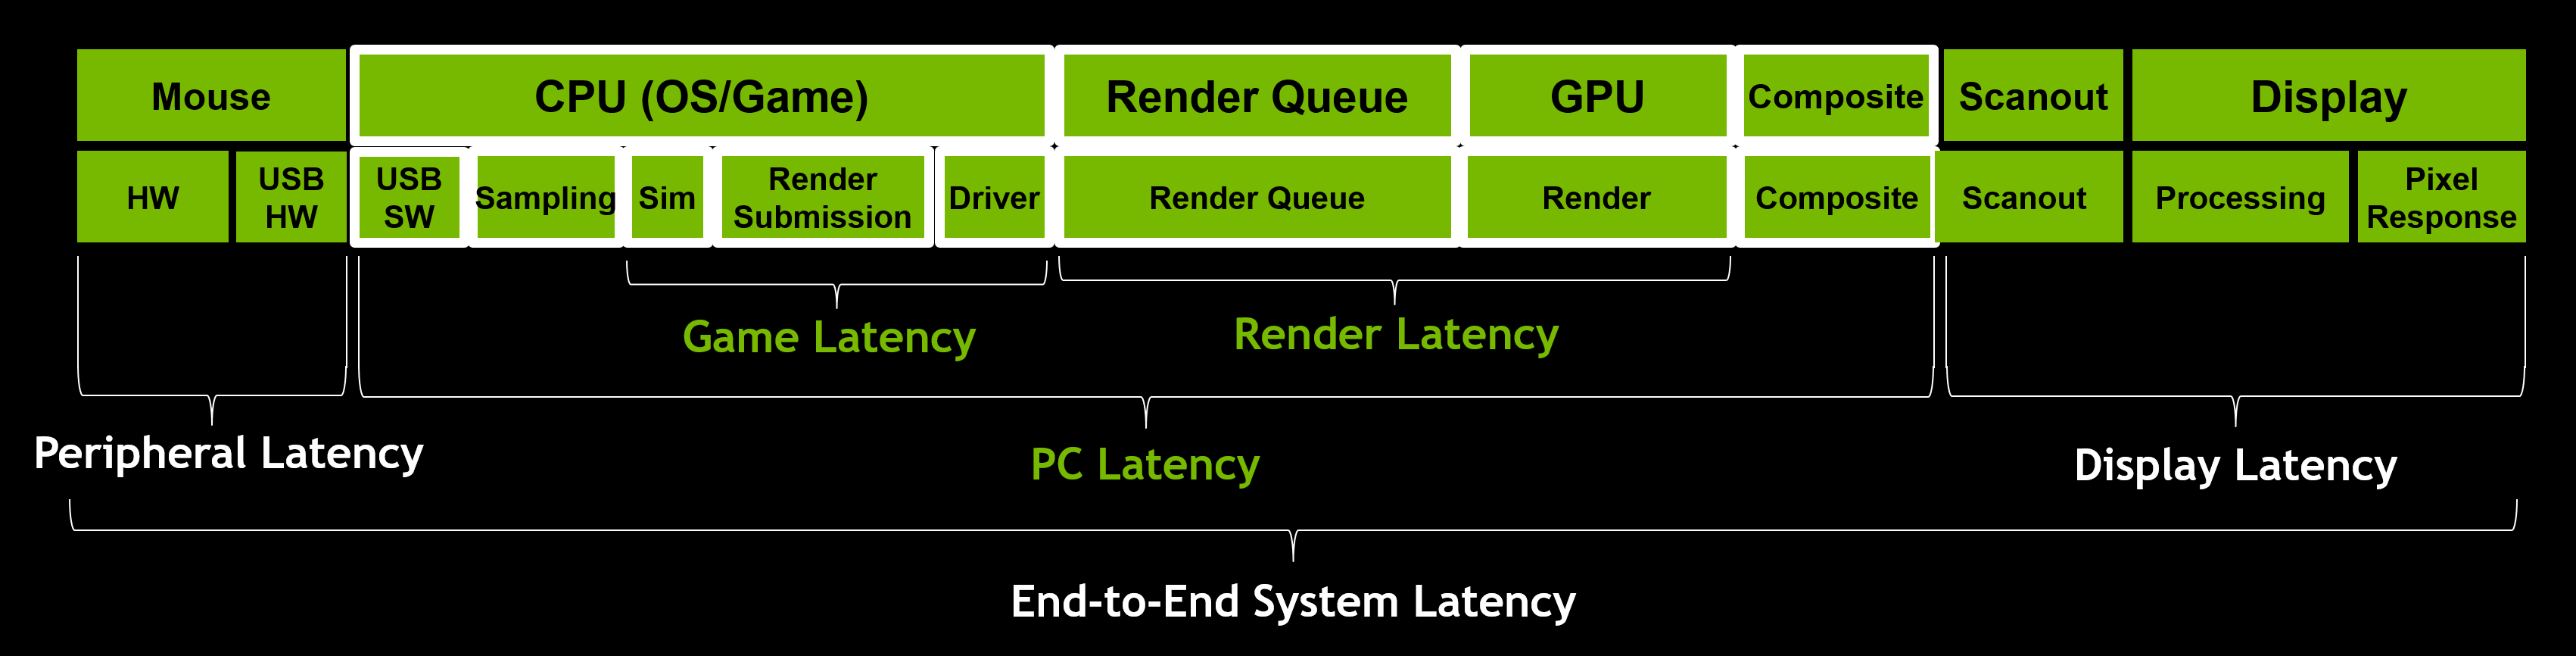 nvidia-latency-optimization-guide-pc-latency.png